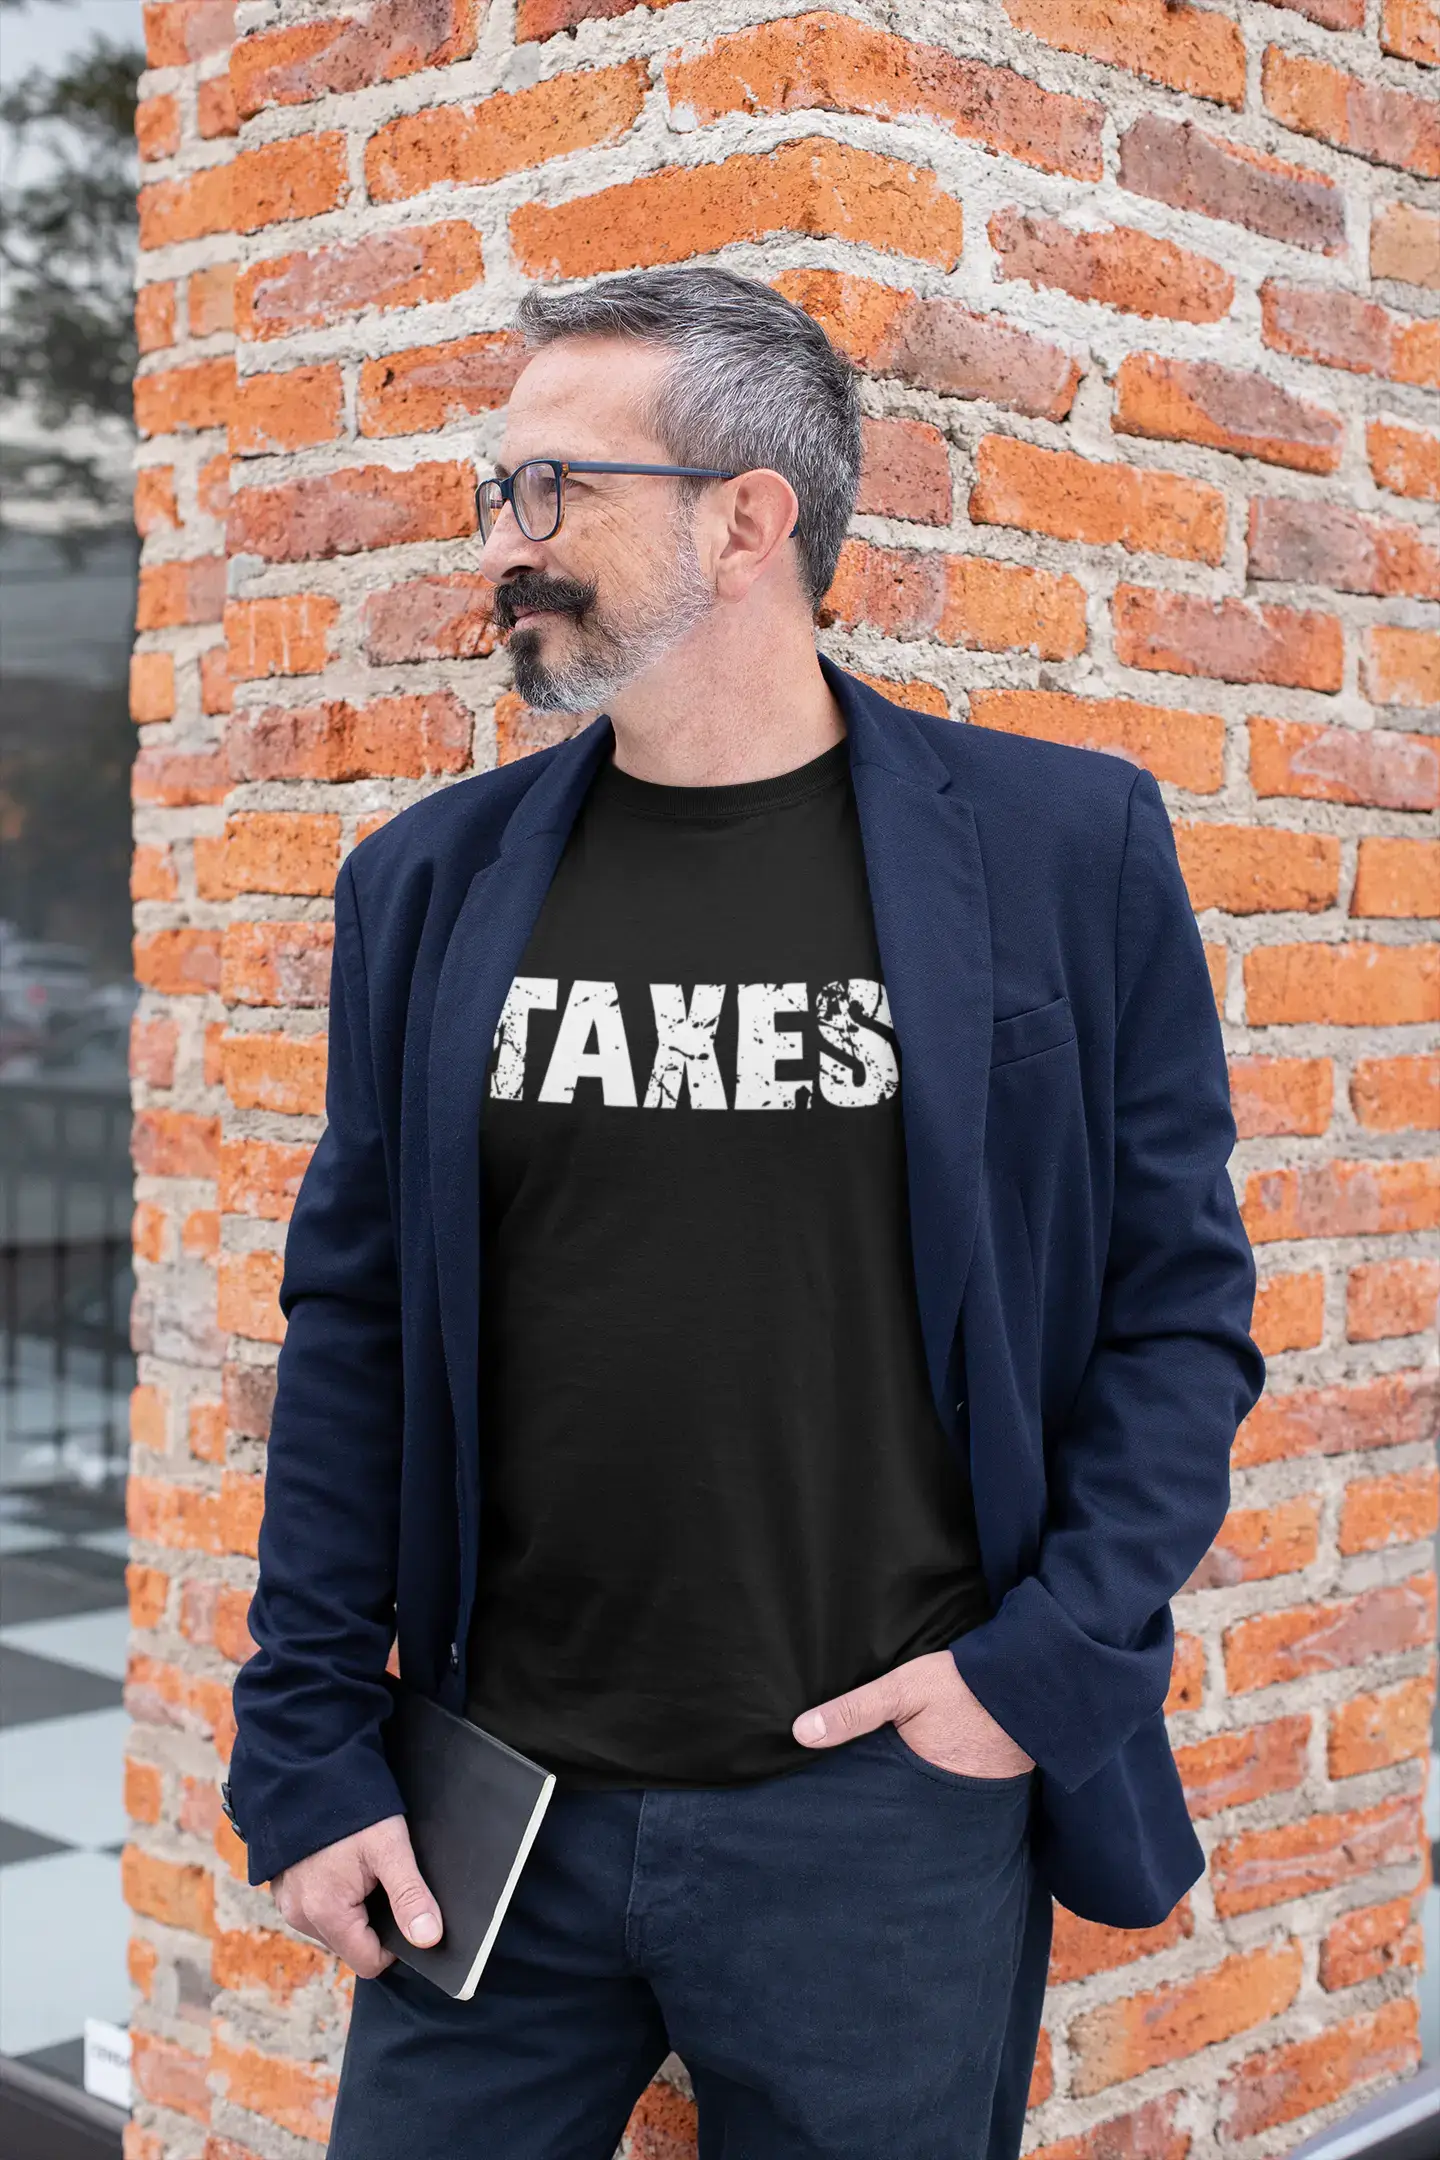 taxes Men's Retro T shirt Black Birthday Gift 00553